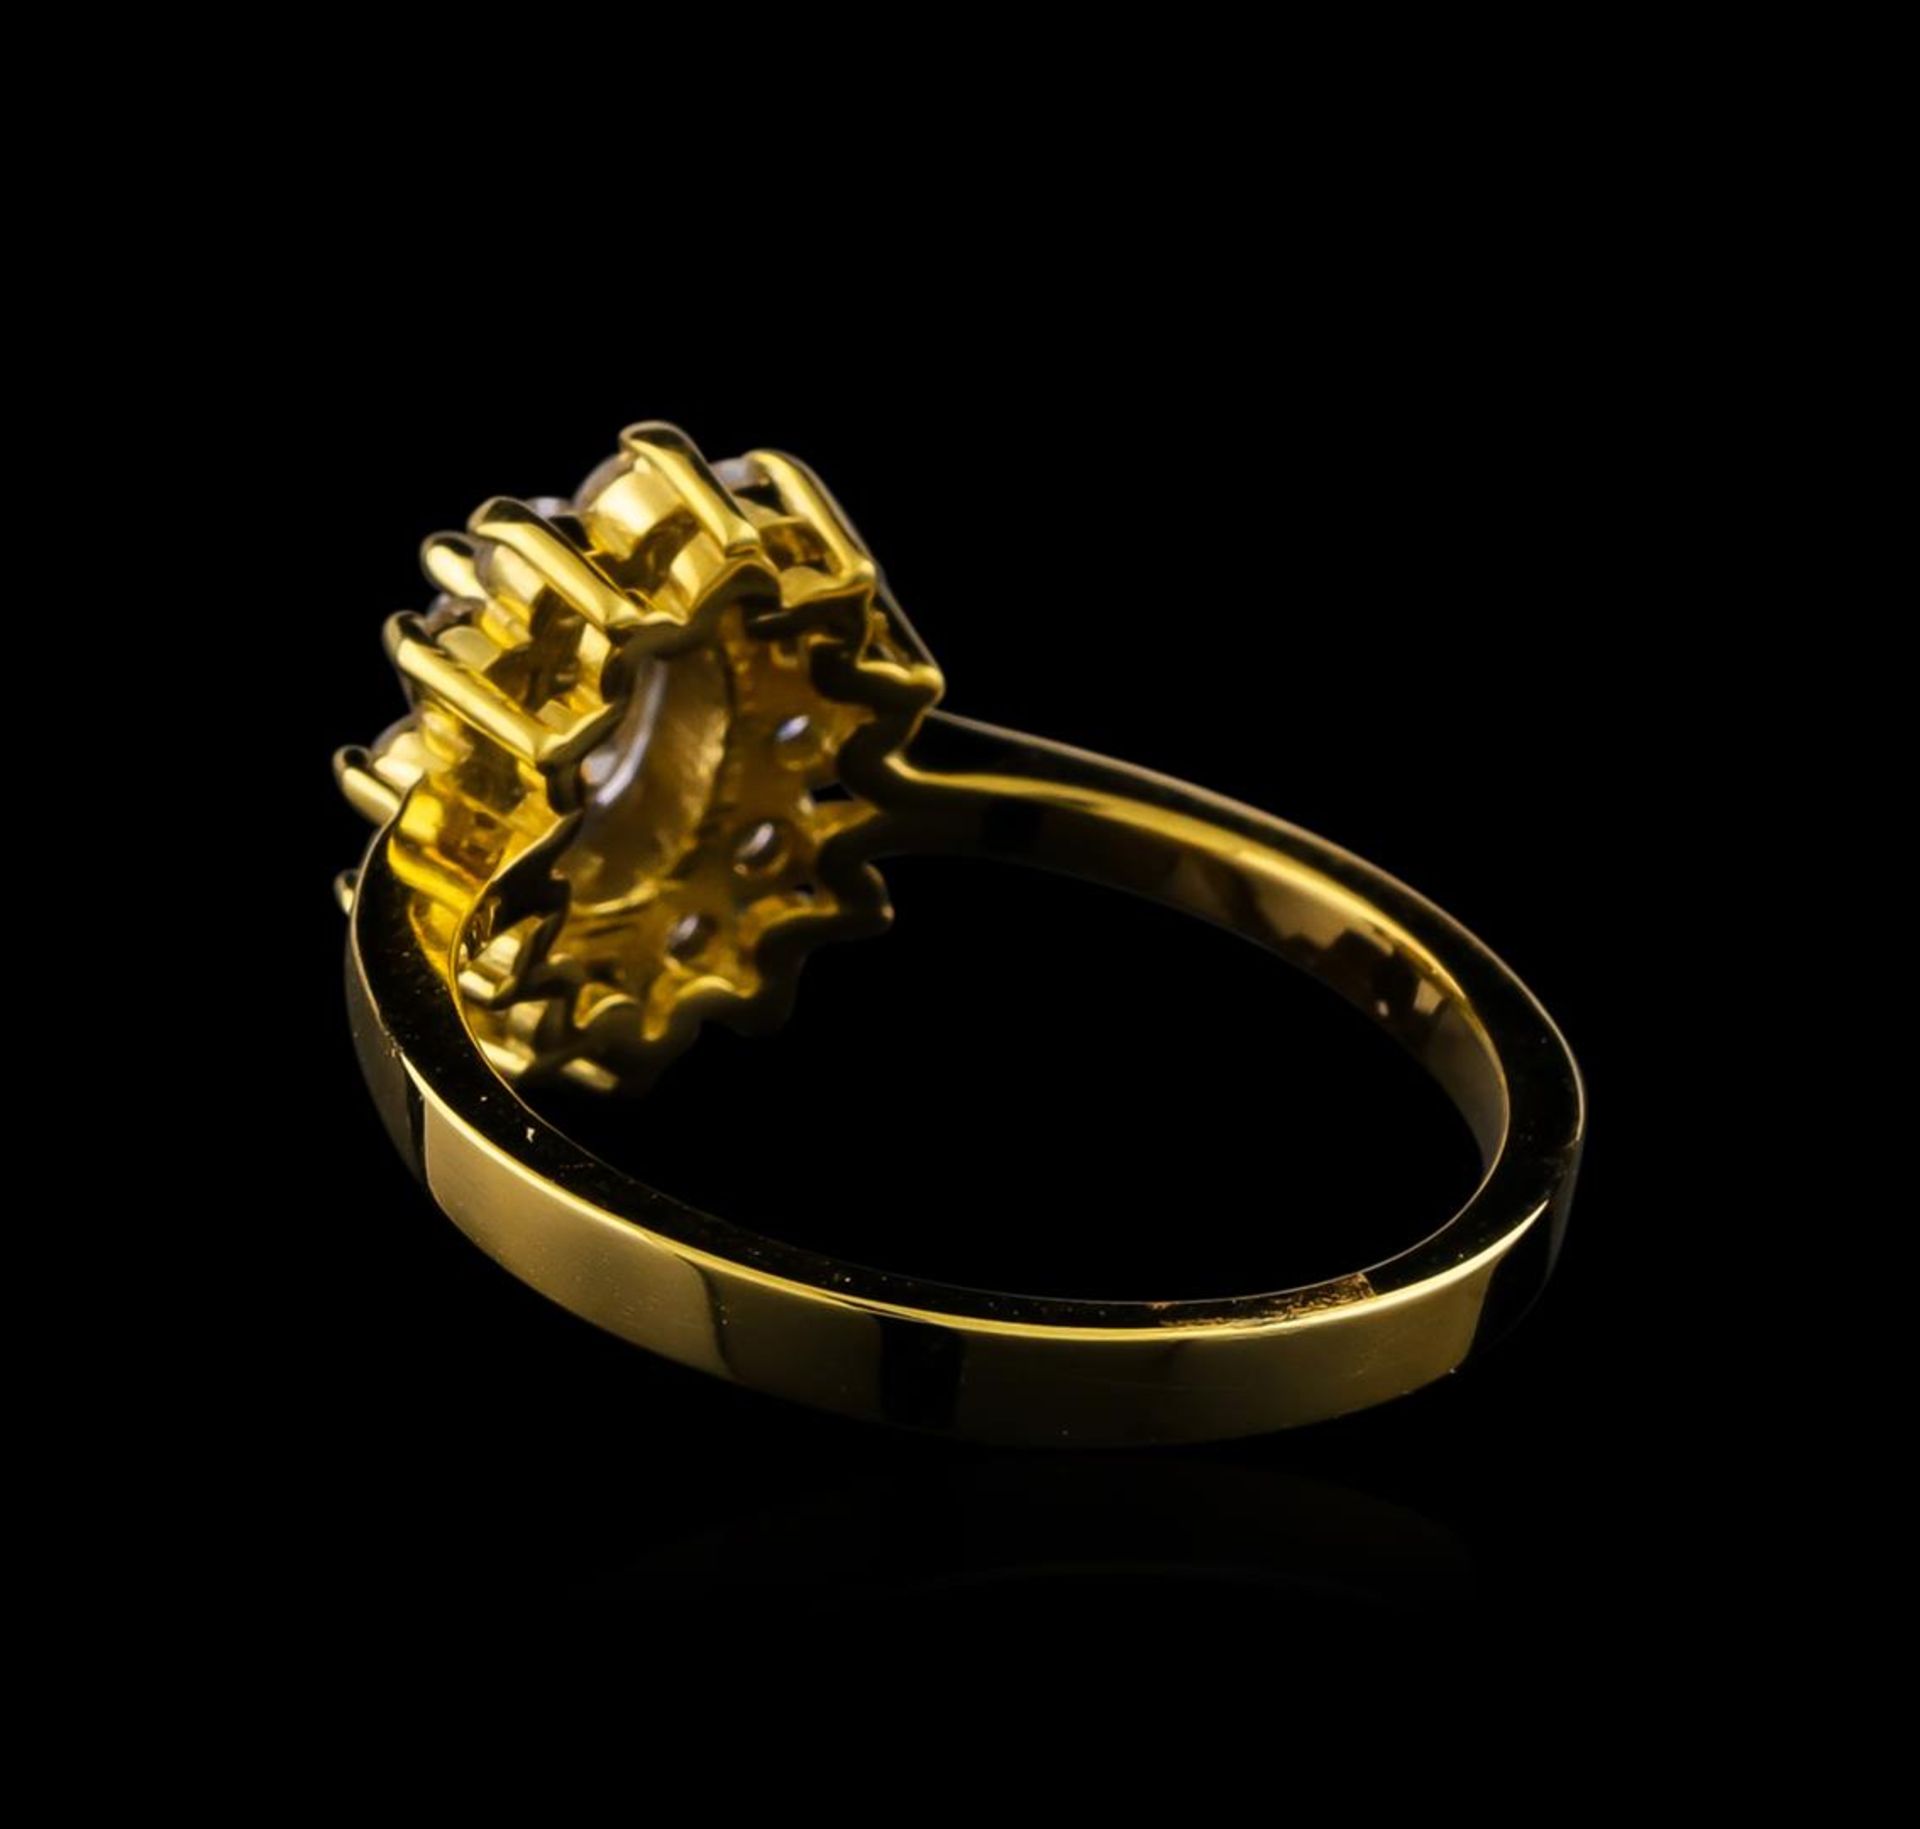 0.95 ctw Diamond Ring - 14KT Yellow Gold - Image 3 of 4